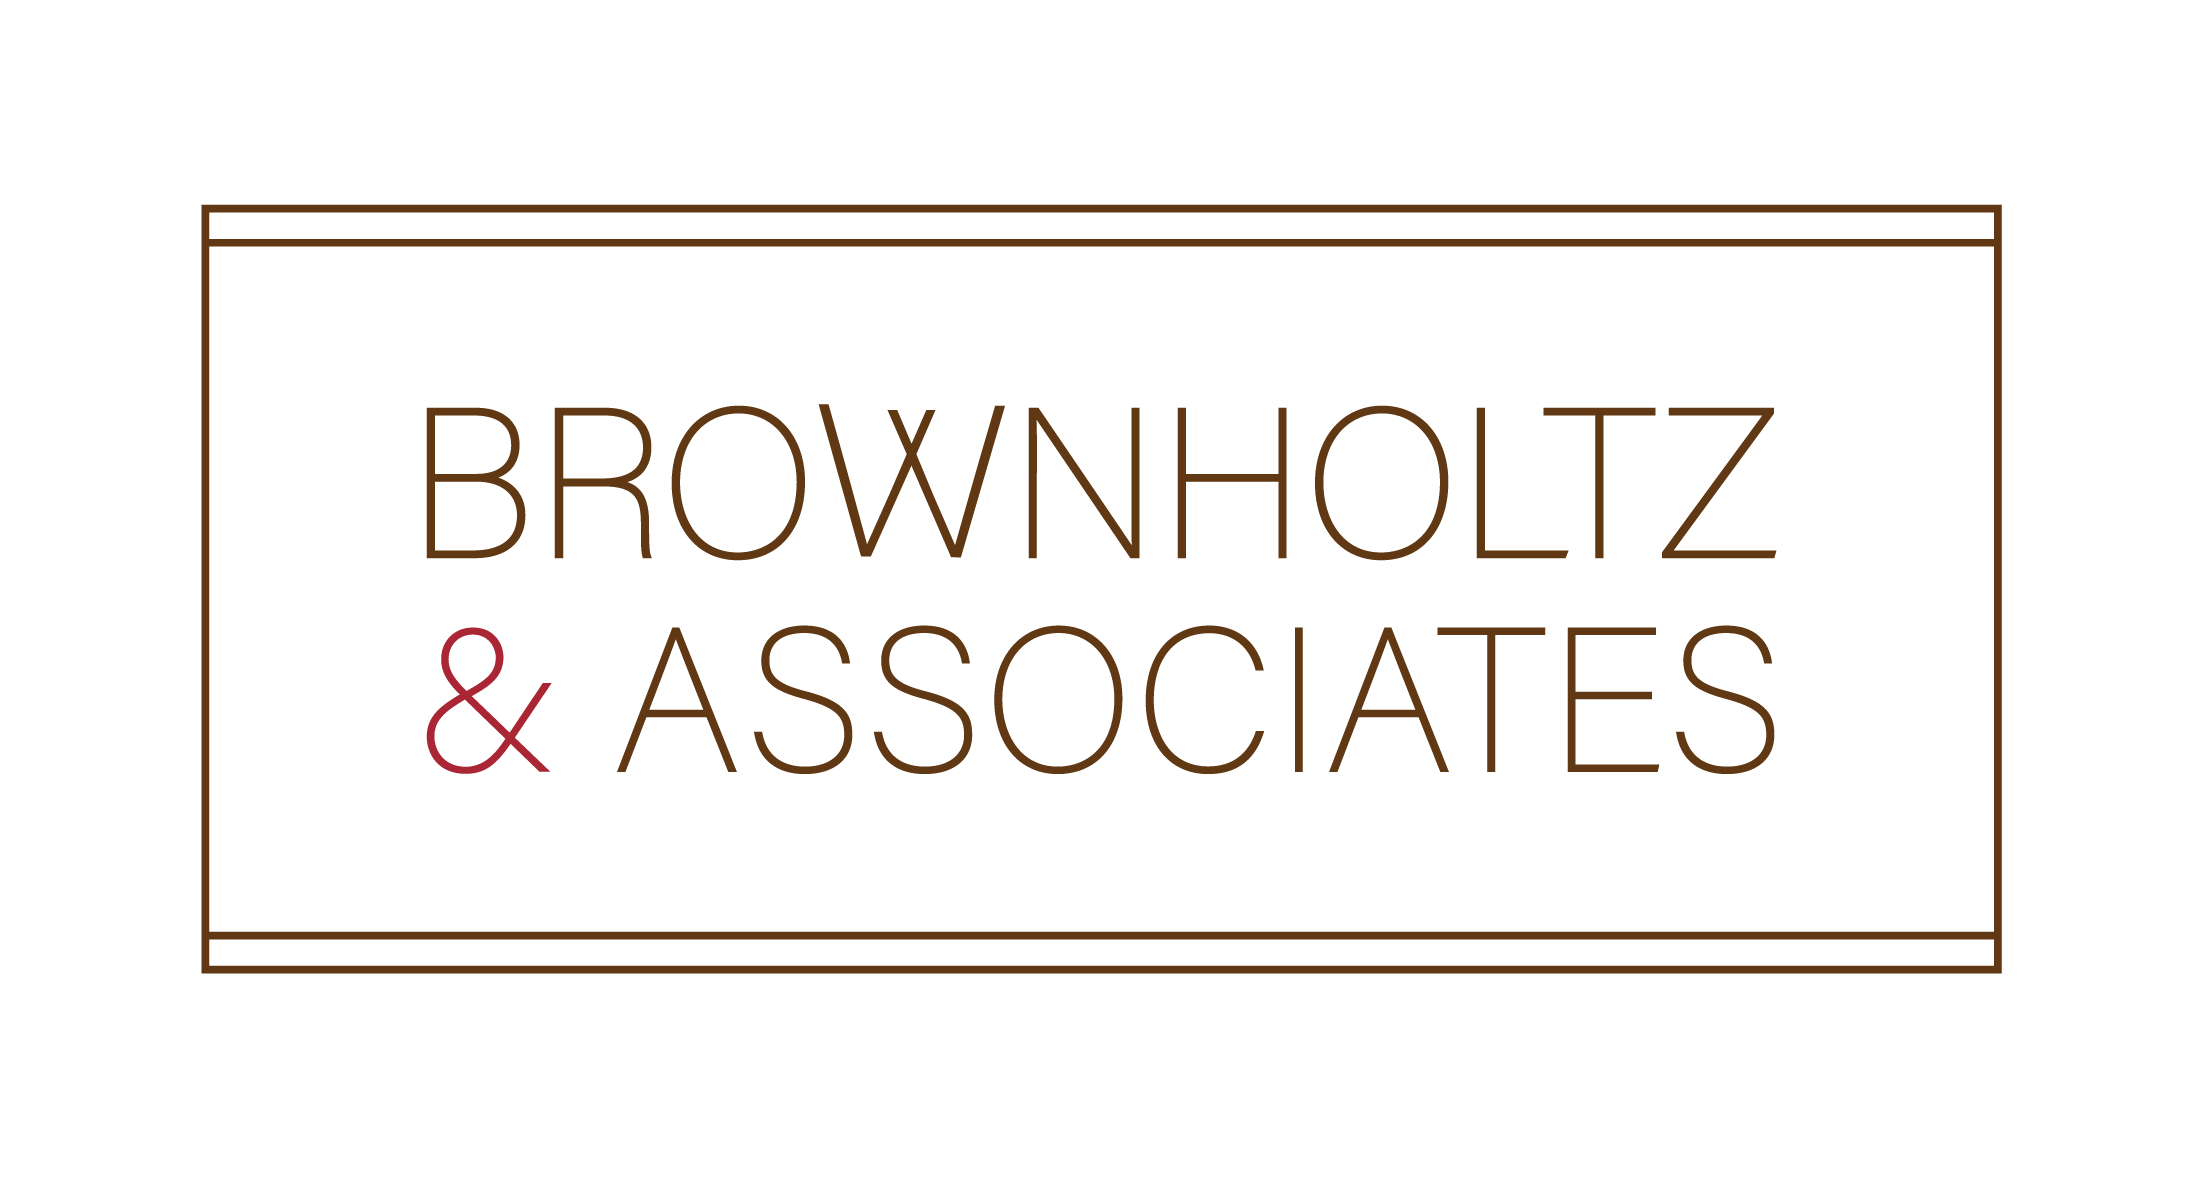 Brownholtz & Associates